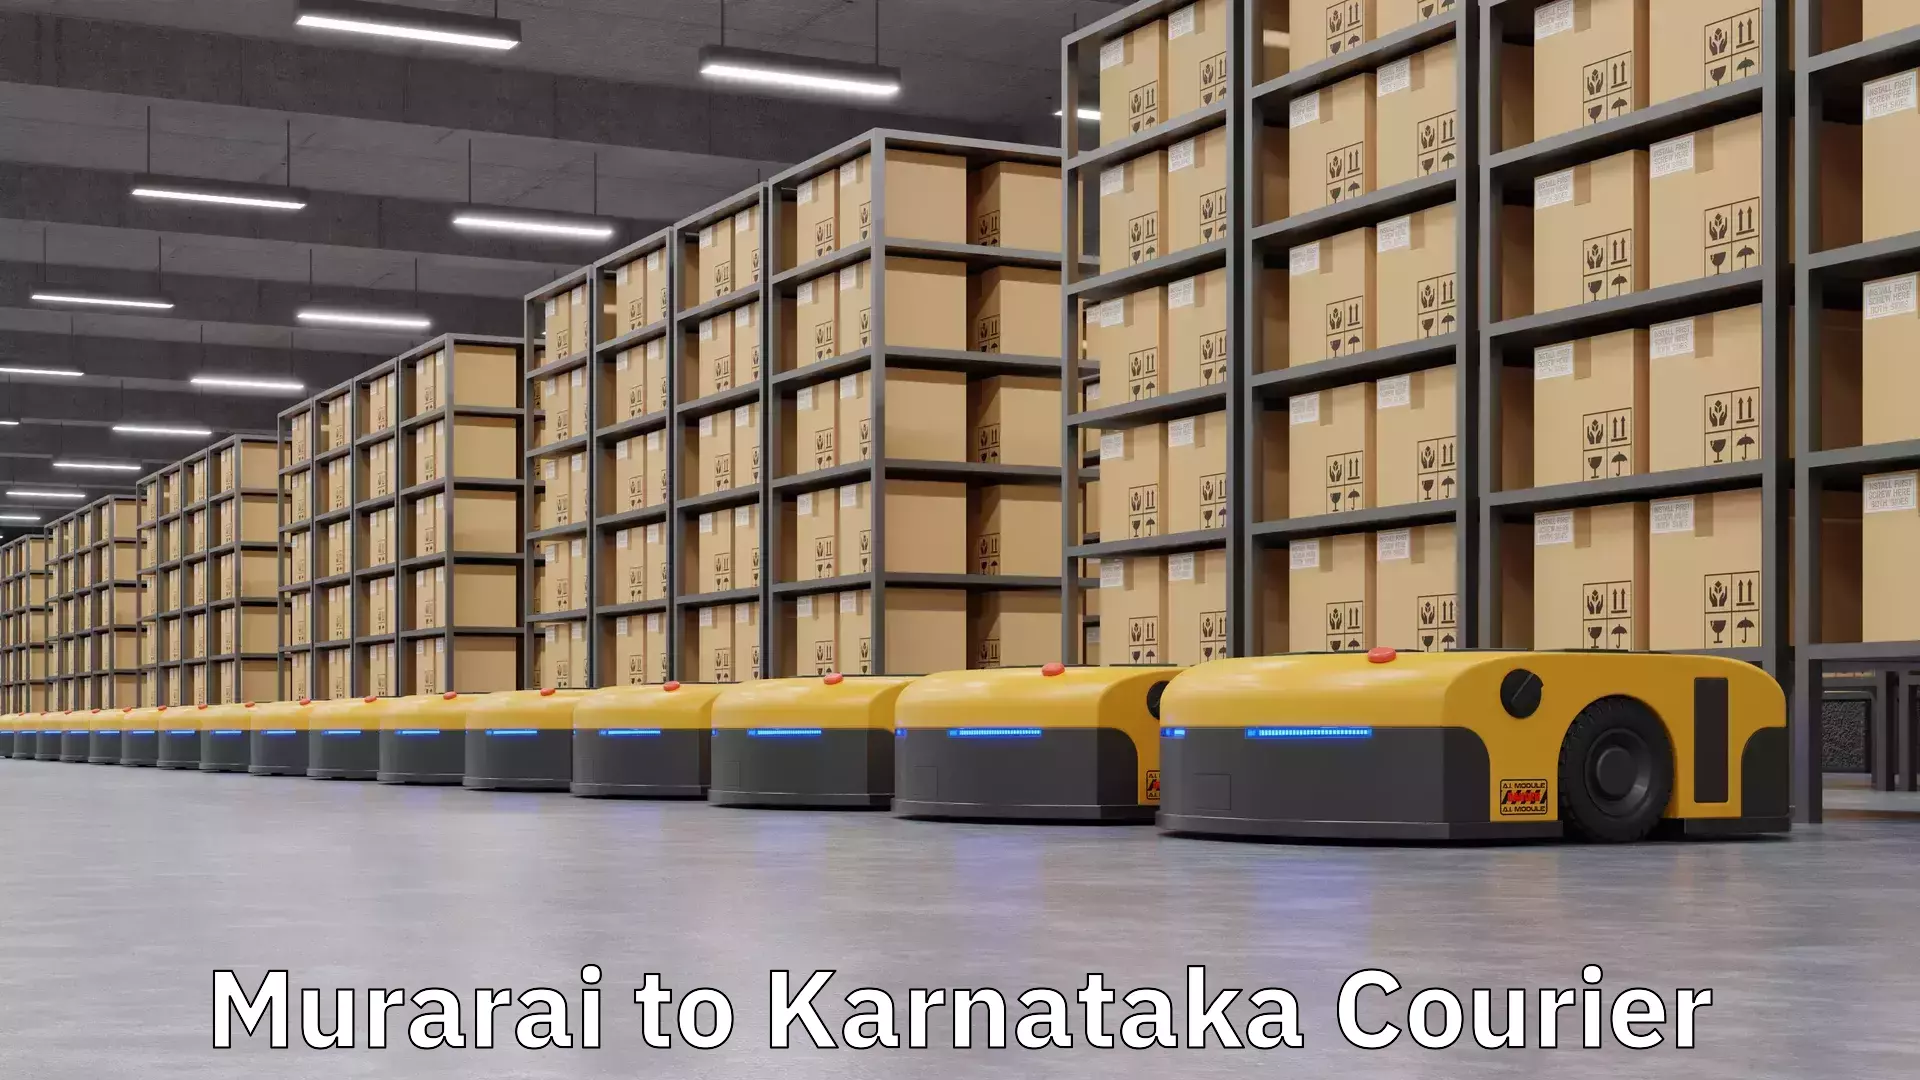 Courier service innovation Murarai to Karnataka